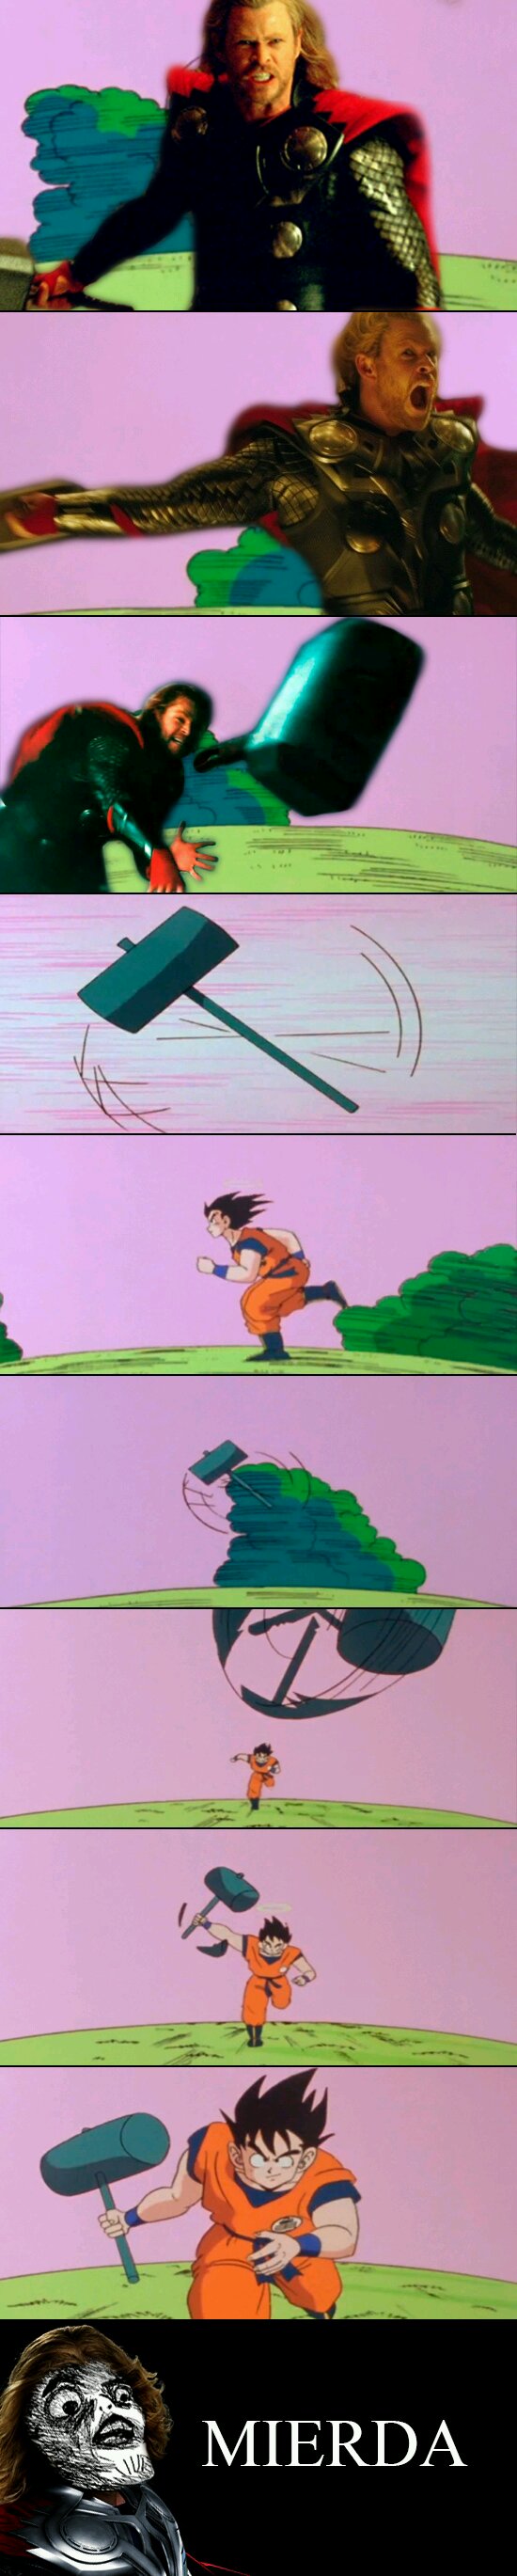 Thor vs Goku - meme